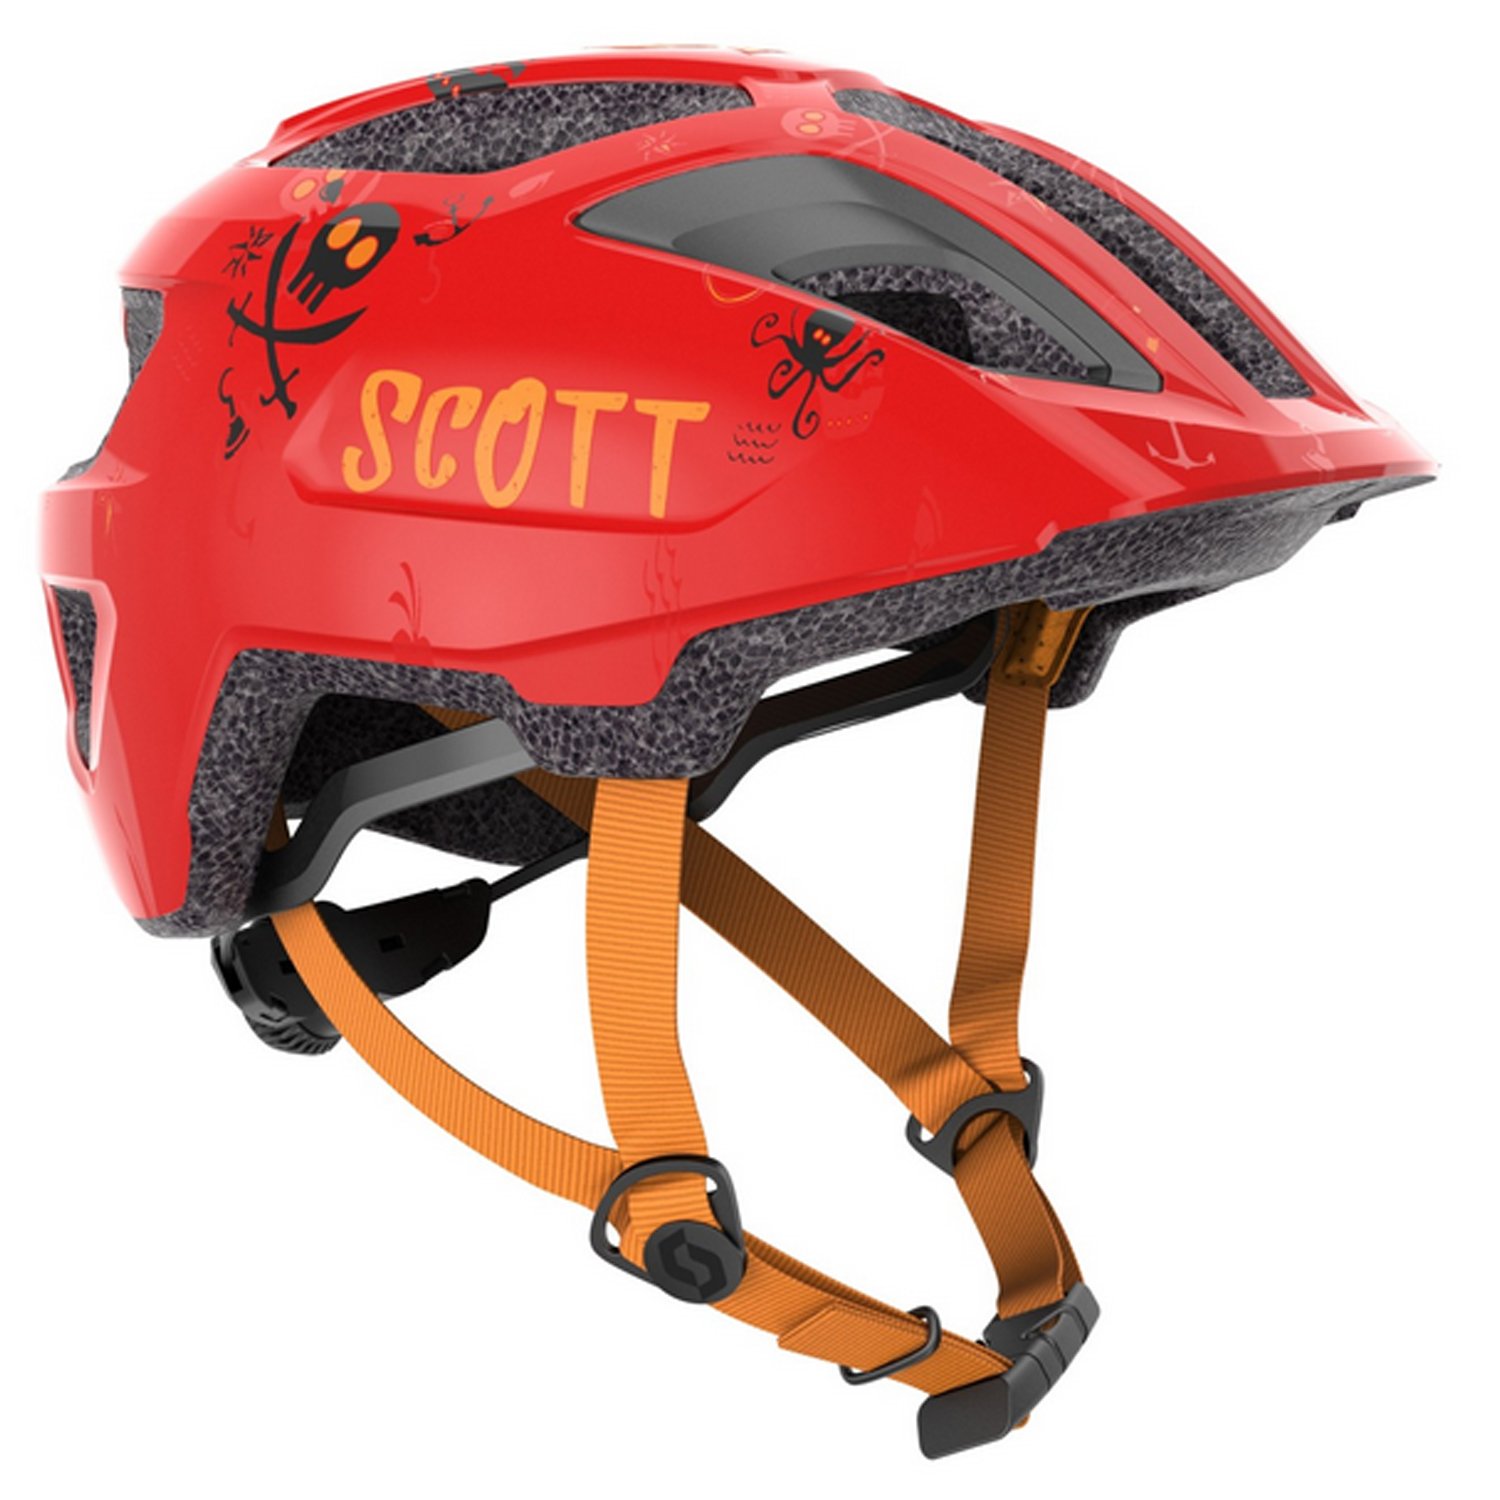 Велошлем SCOTT Spunto Kid (CE), детский, florida red, ES275235-6909 велошлем scott jr spunto plus ce fire orange es288597 6522